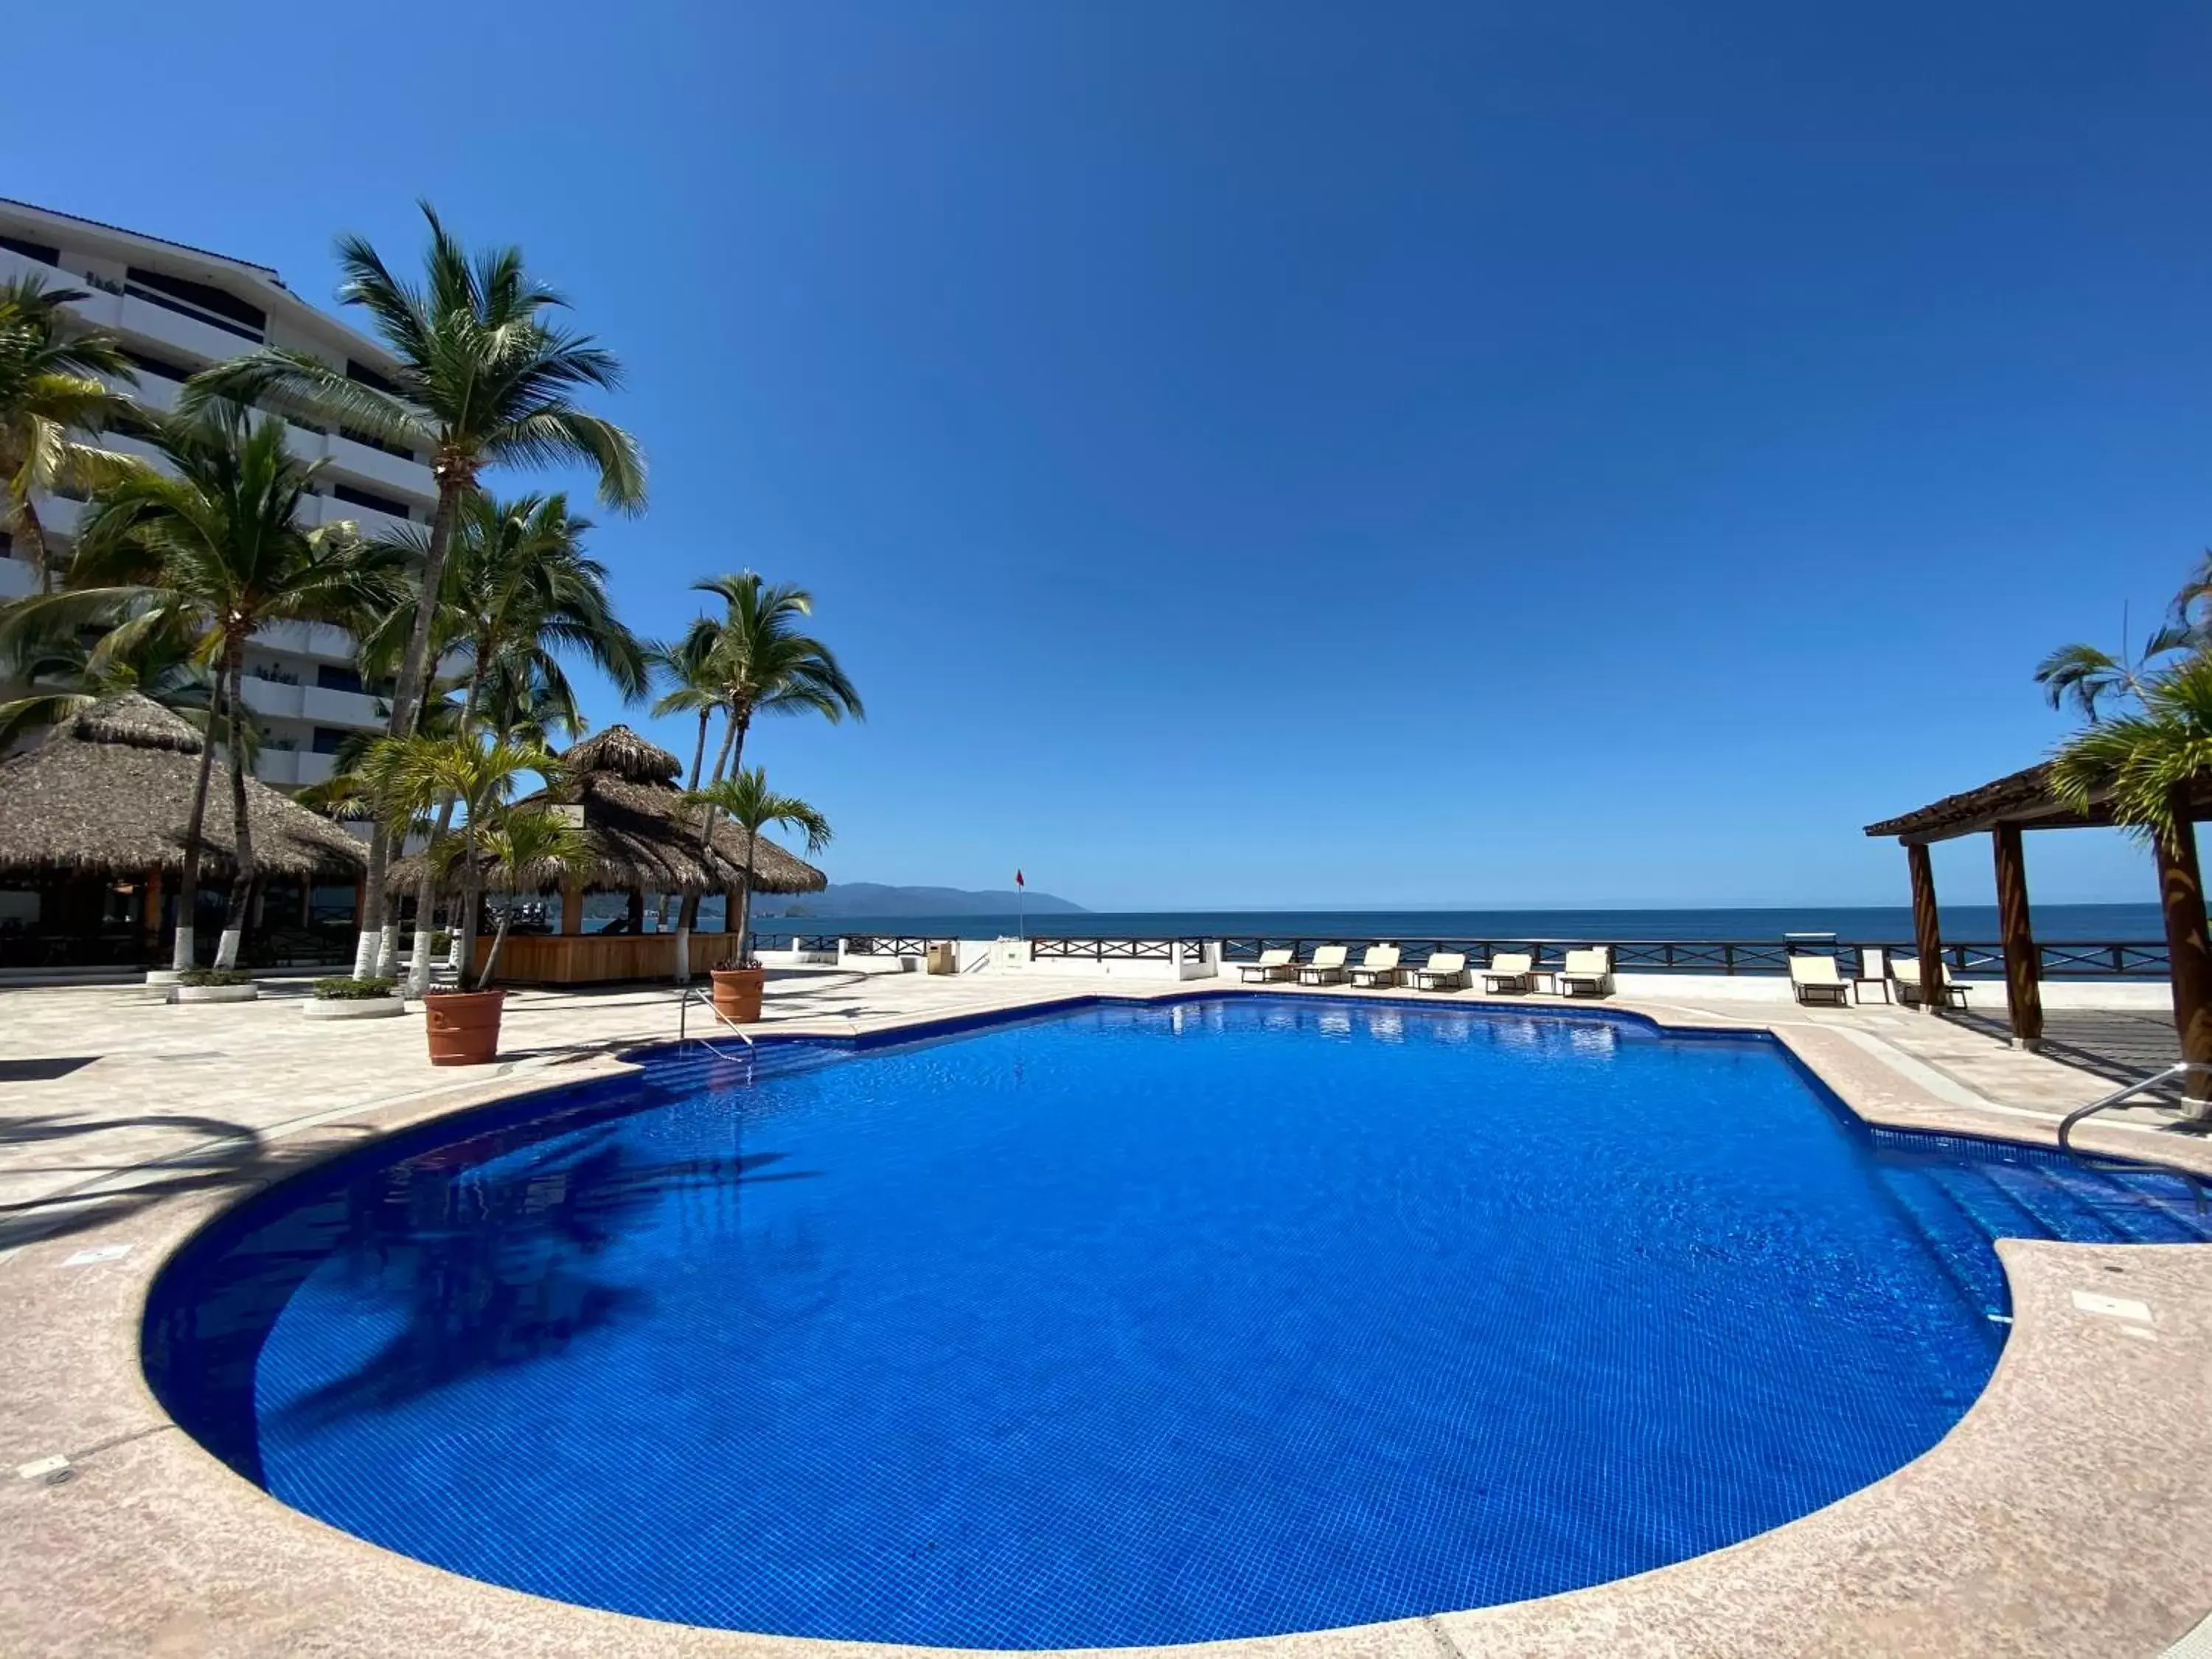 Swimming Pool in Costa Sur Resort & Spa